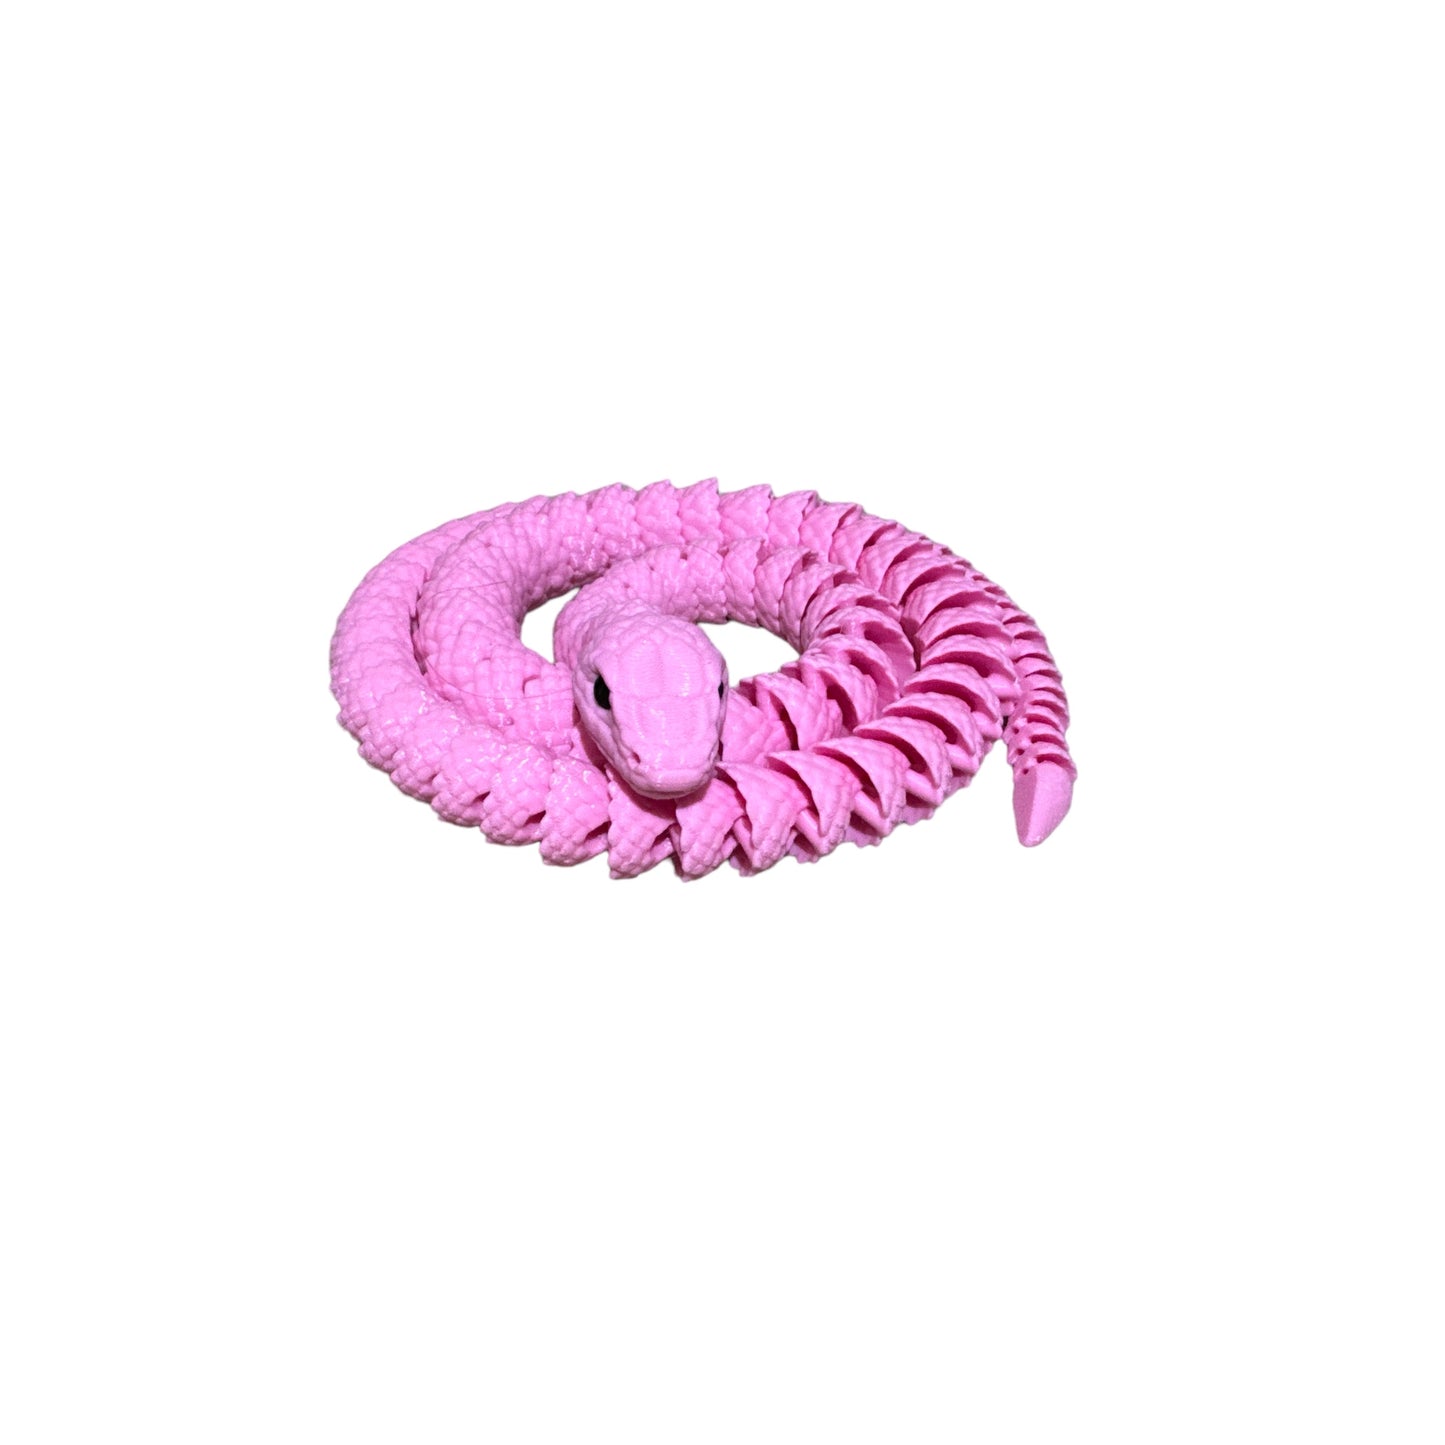 3D Printed Snake - Single Color